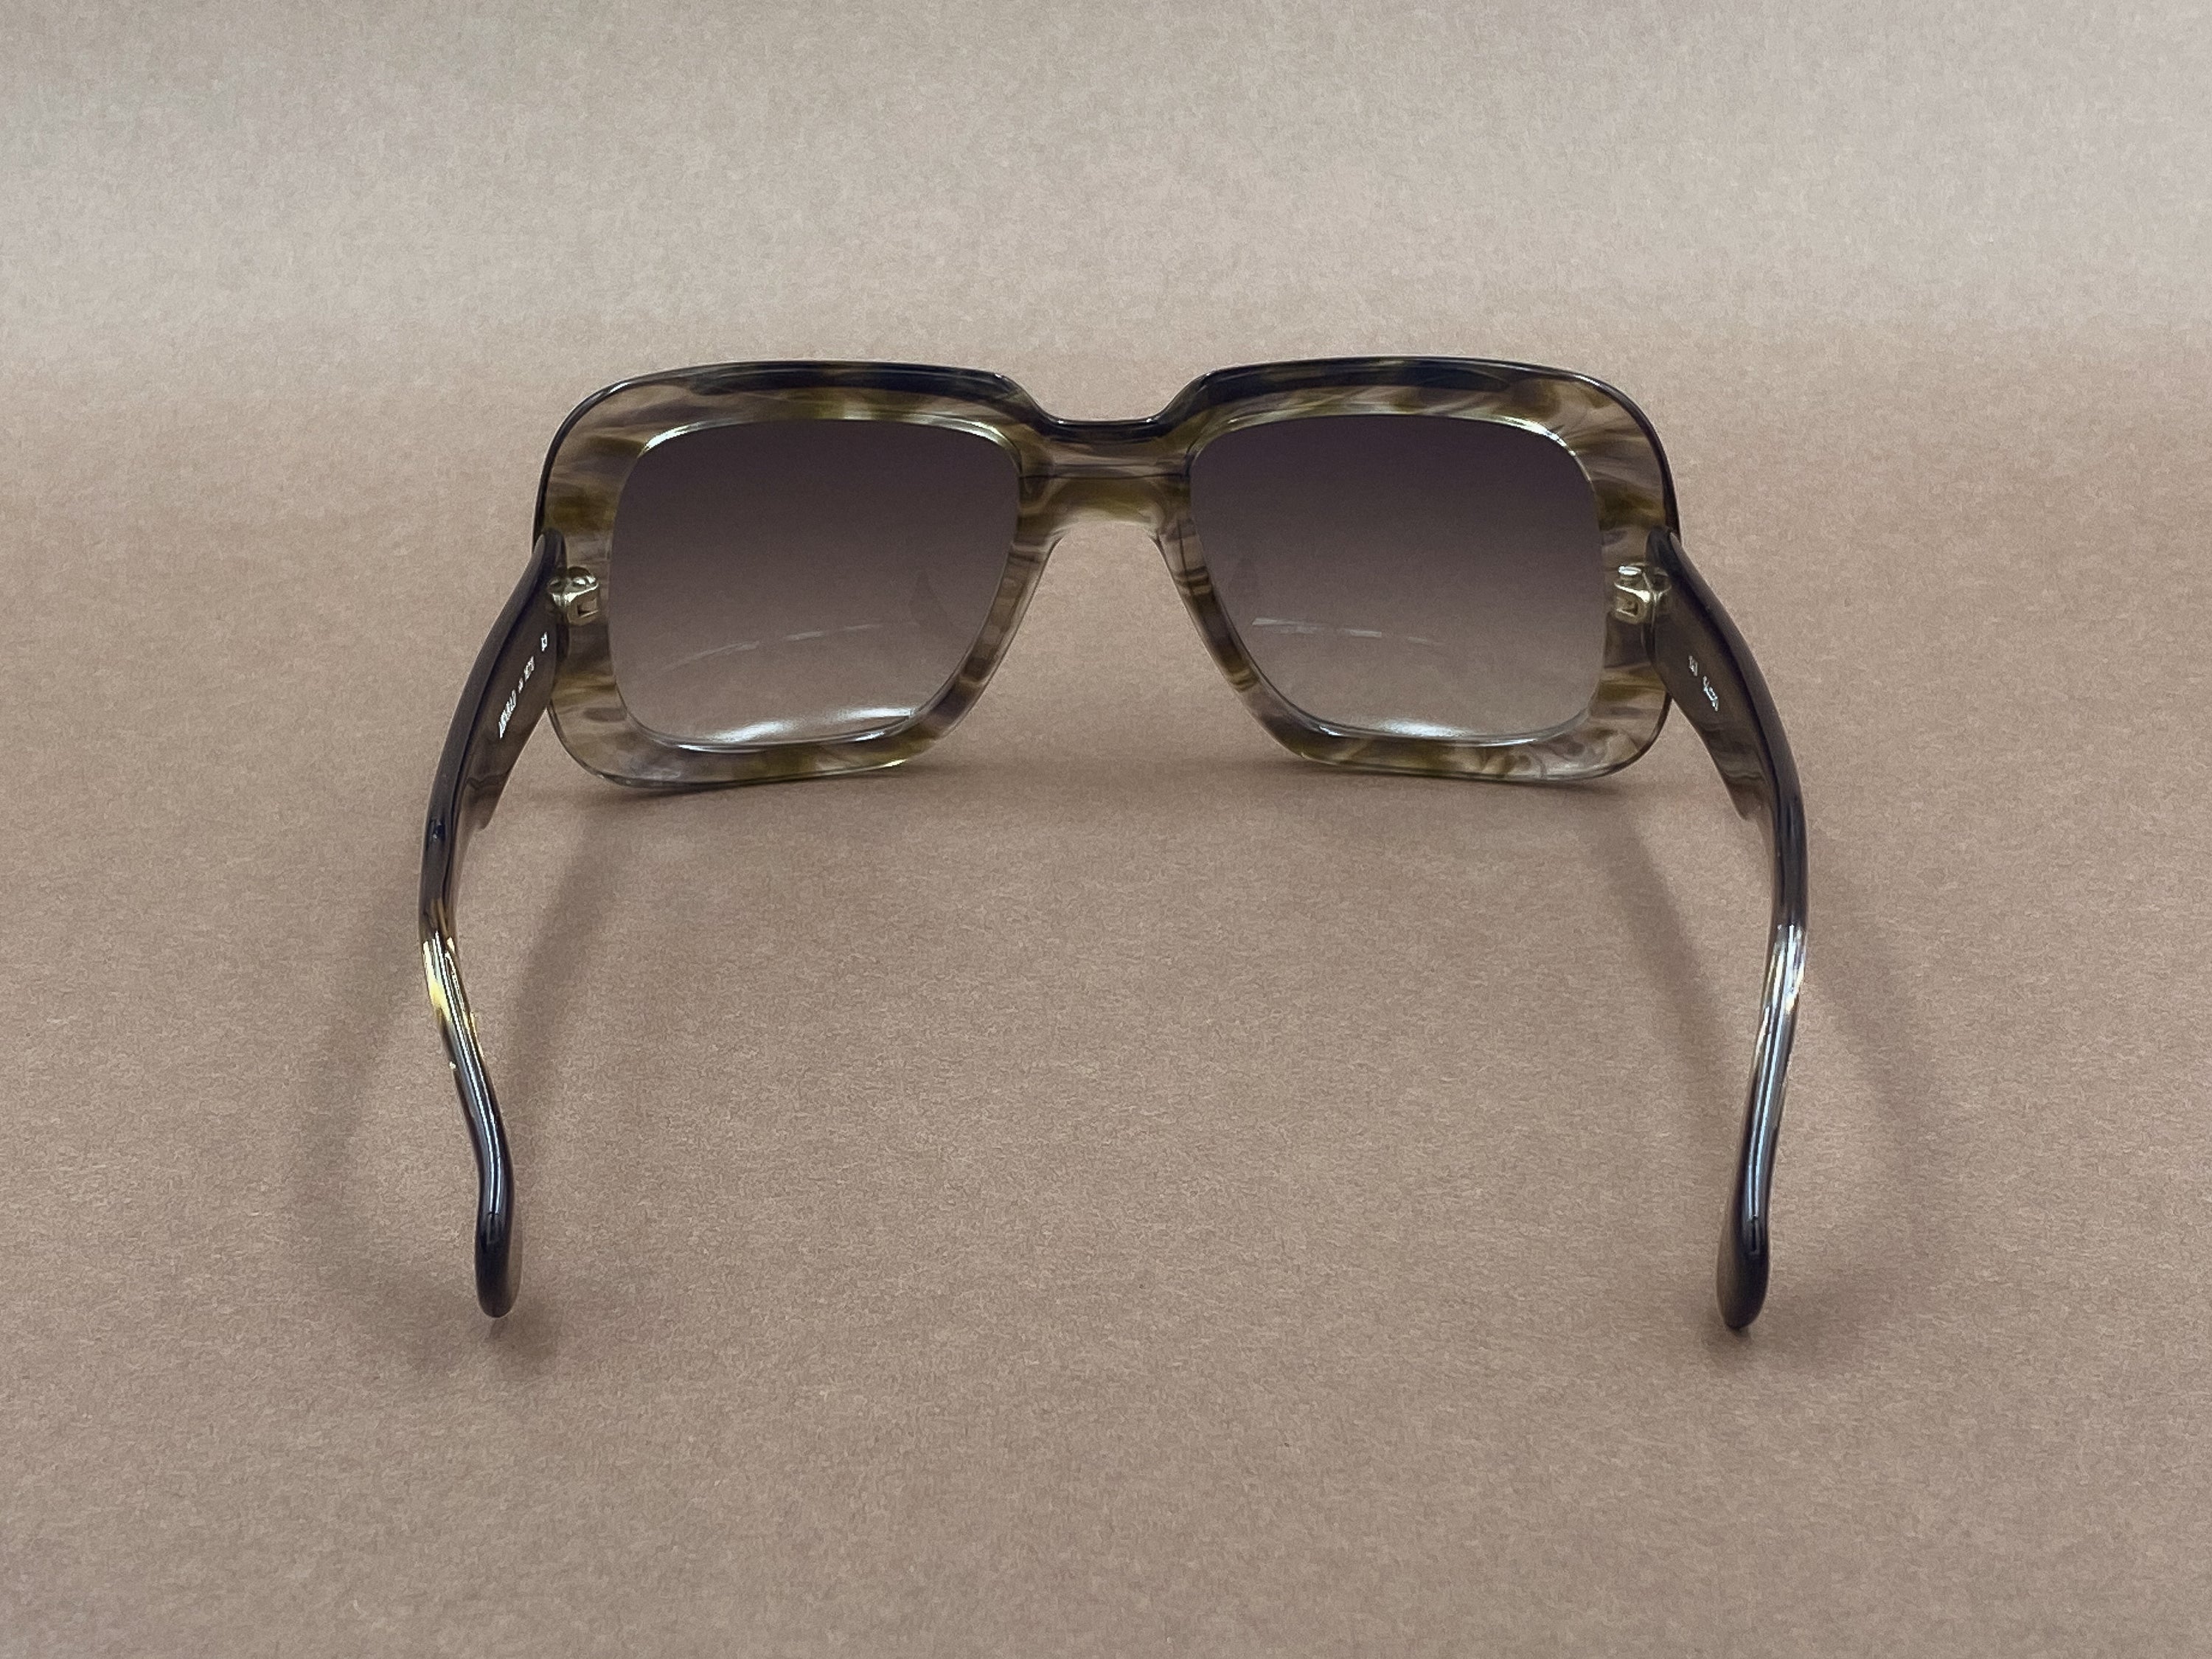 Menrad 1670 sunglasses